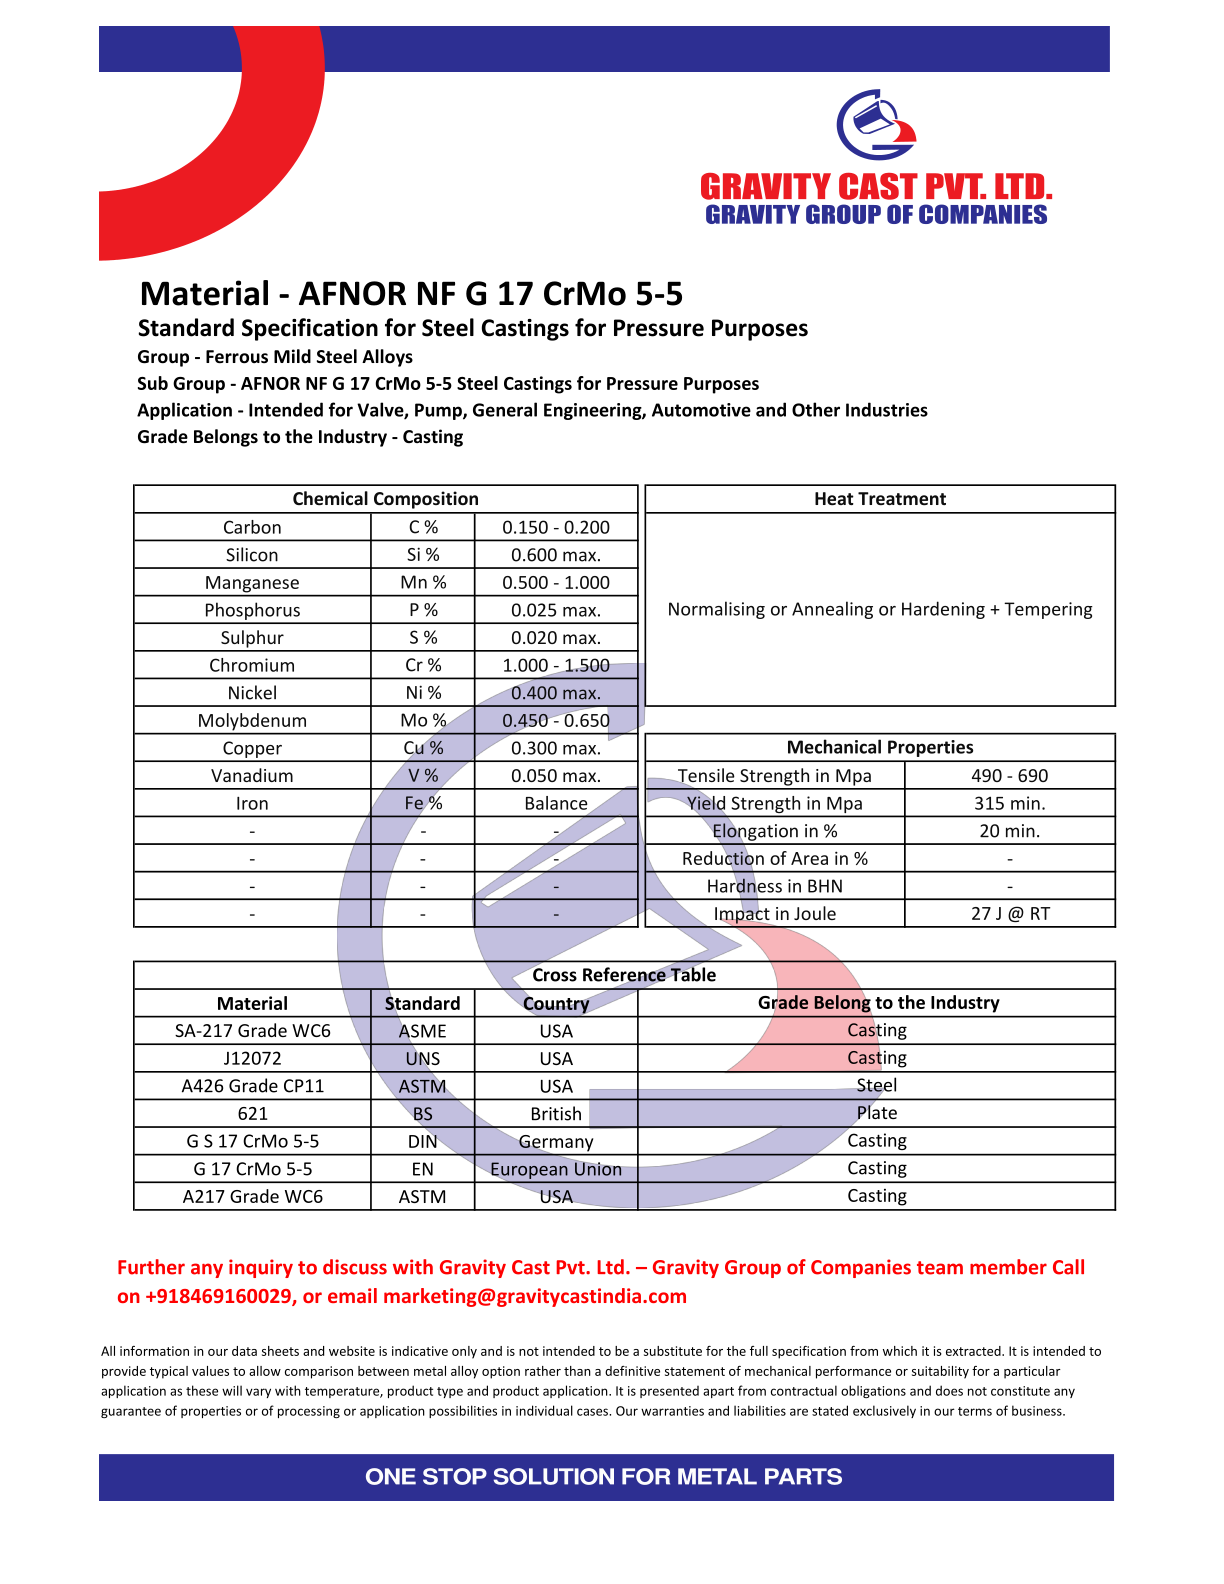 AFNOR NF G 17 CrMo 5-5.pdf